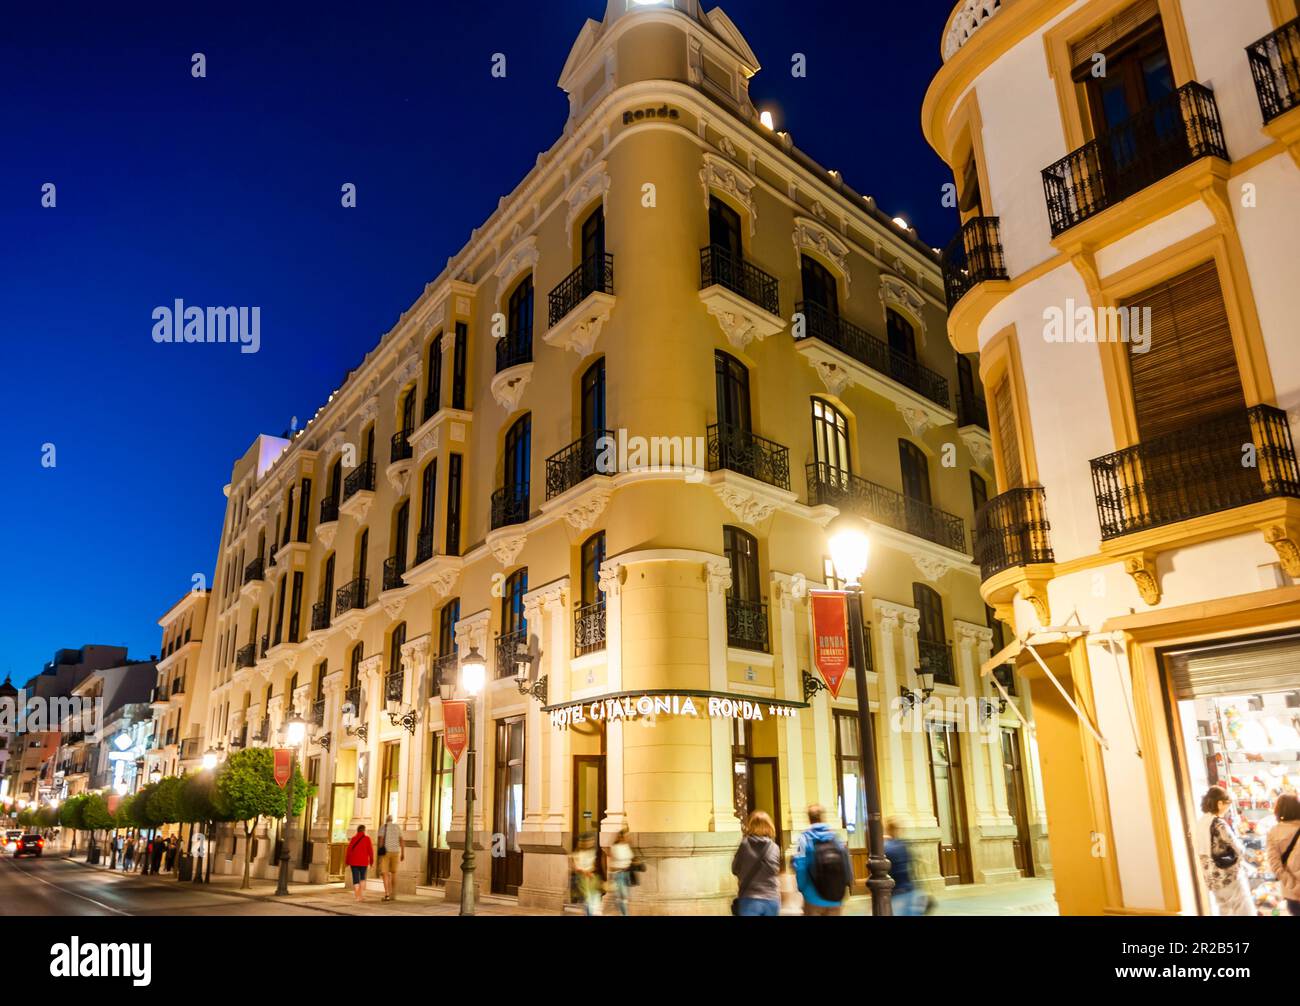 Ronda, Malaga, Spanien, Altstadt, Touristenhotel, "Catalonia Ronda", Nacht, Straßenbeleuchtung, Low Angle, malaga Gentrification, Tourismus Stockfoto